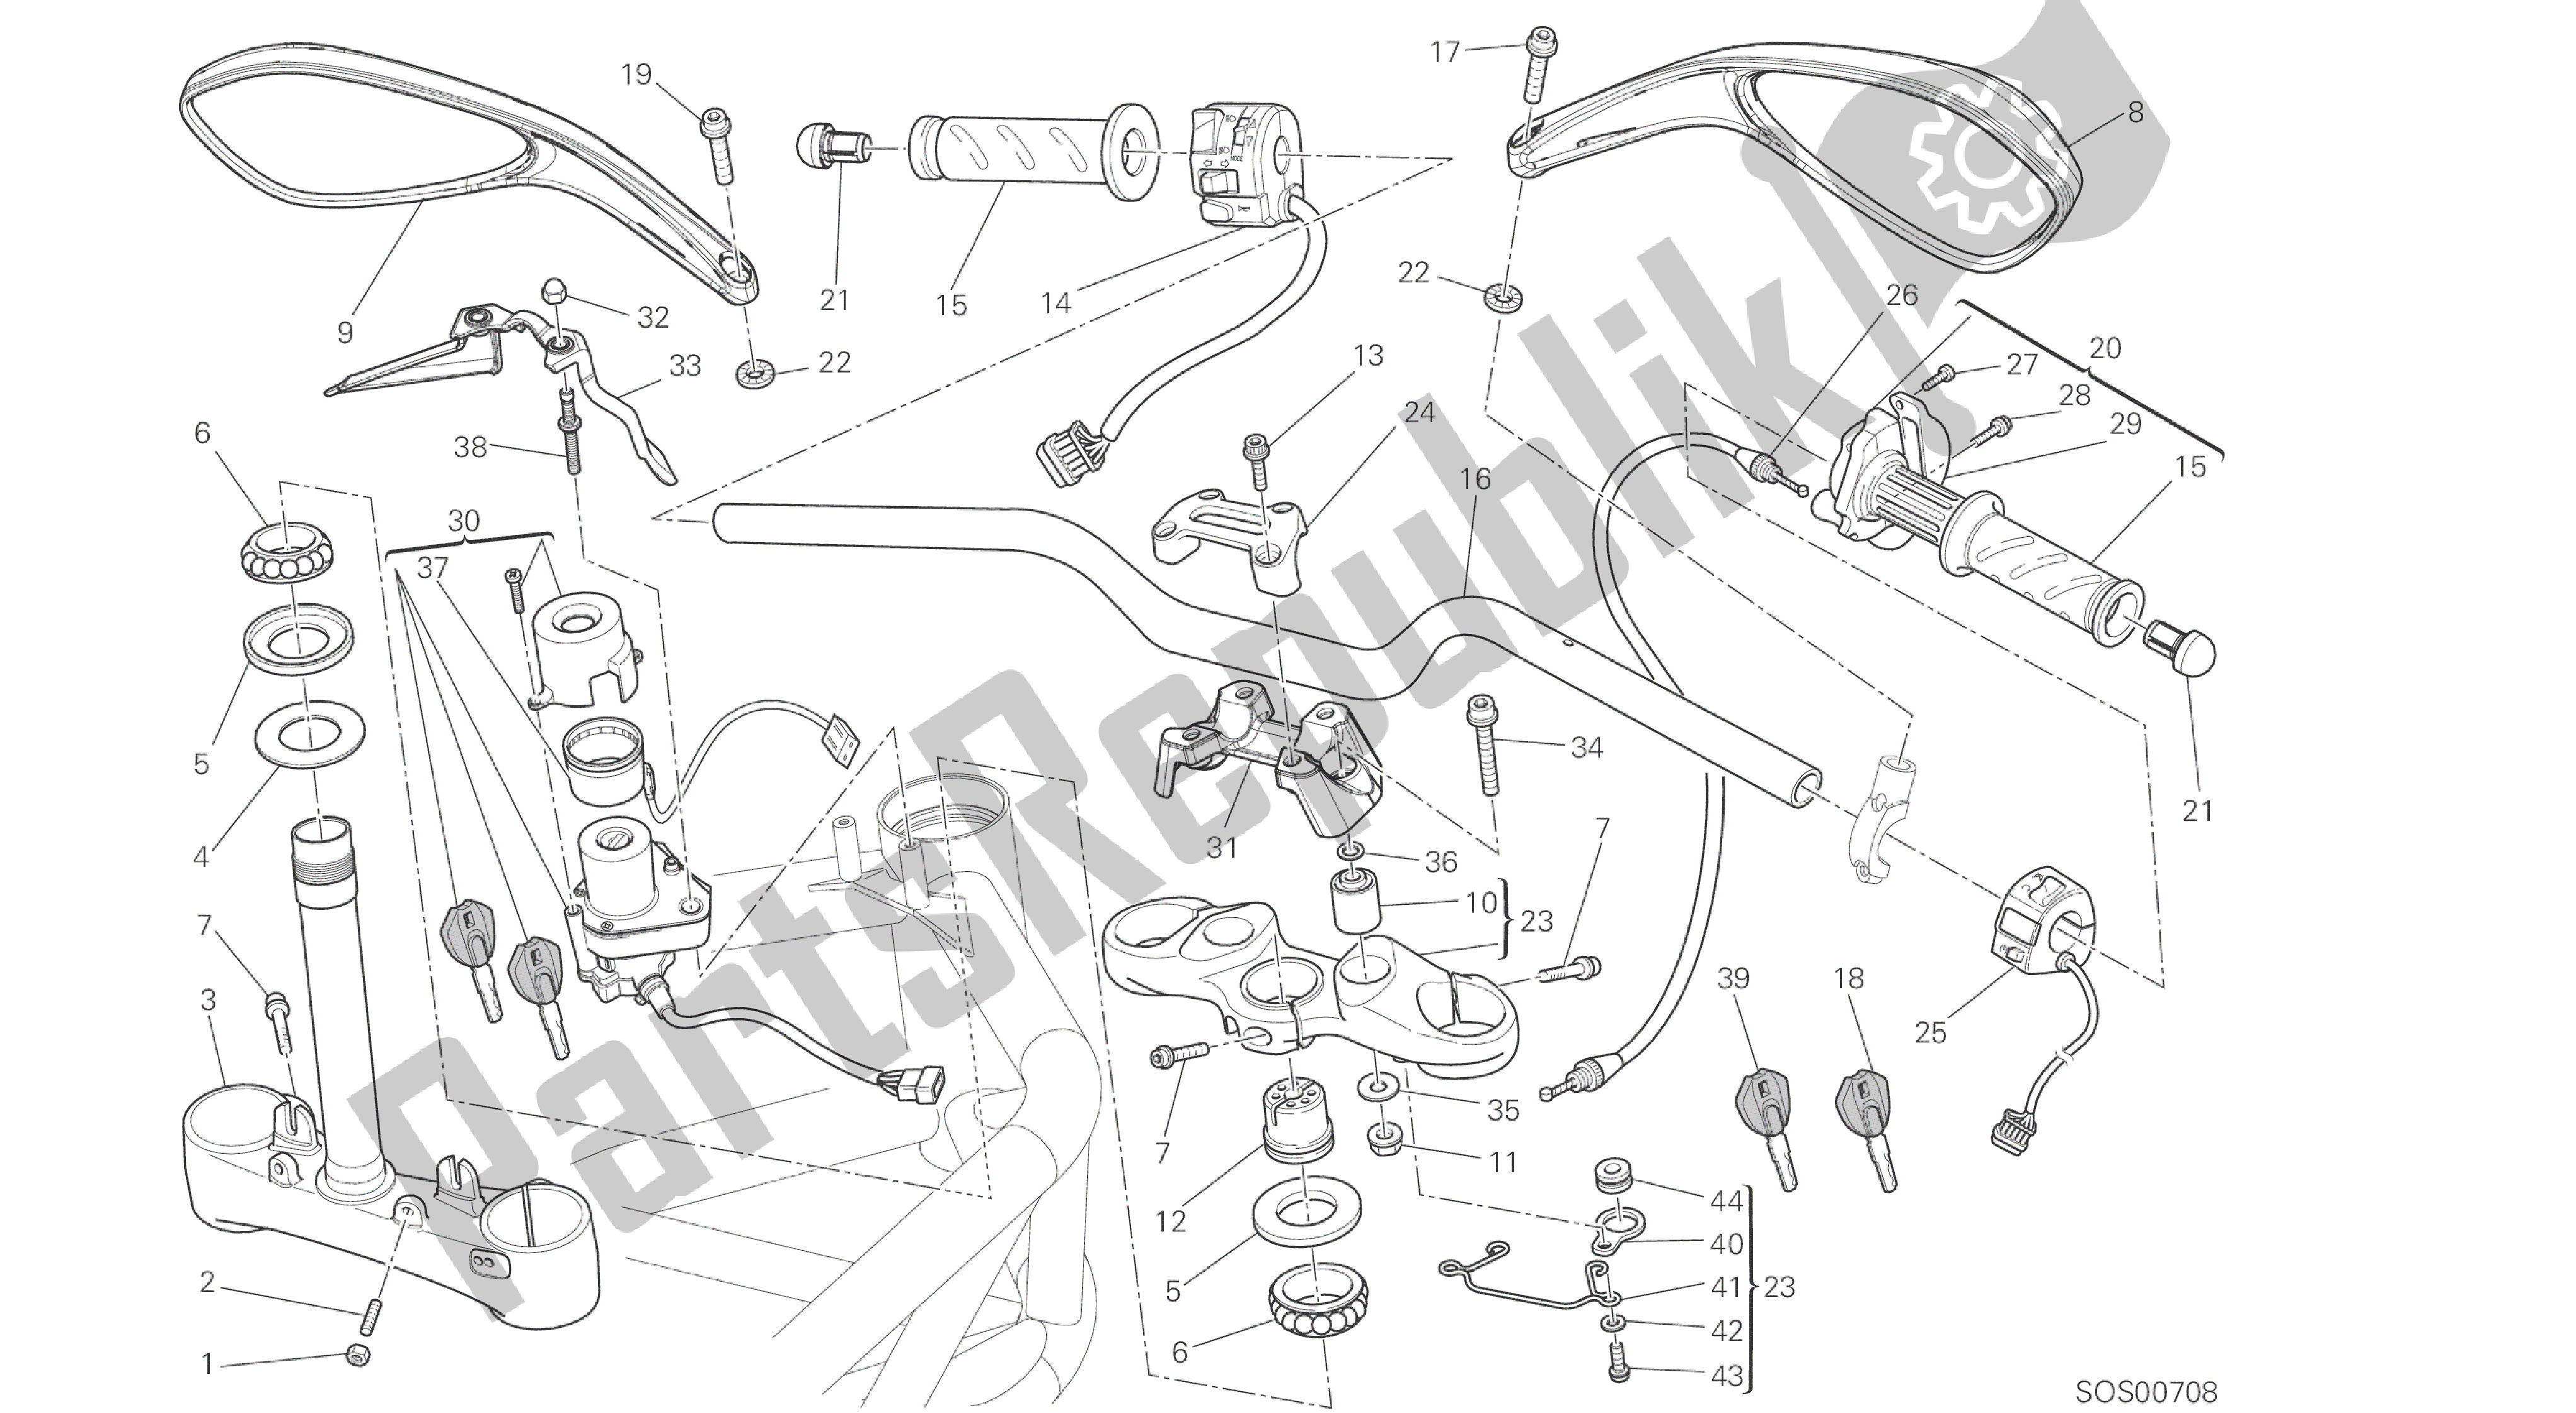 Tutte le parti per il Disegno 026 - Manubrio [mod: M796 Abs; Xst: Aus, Bra, Eur, Jap, Twn] Gruppo Telaio del Ducati Monster ABS 796 2014